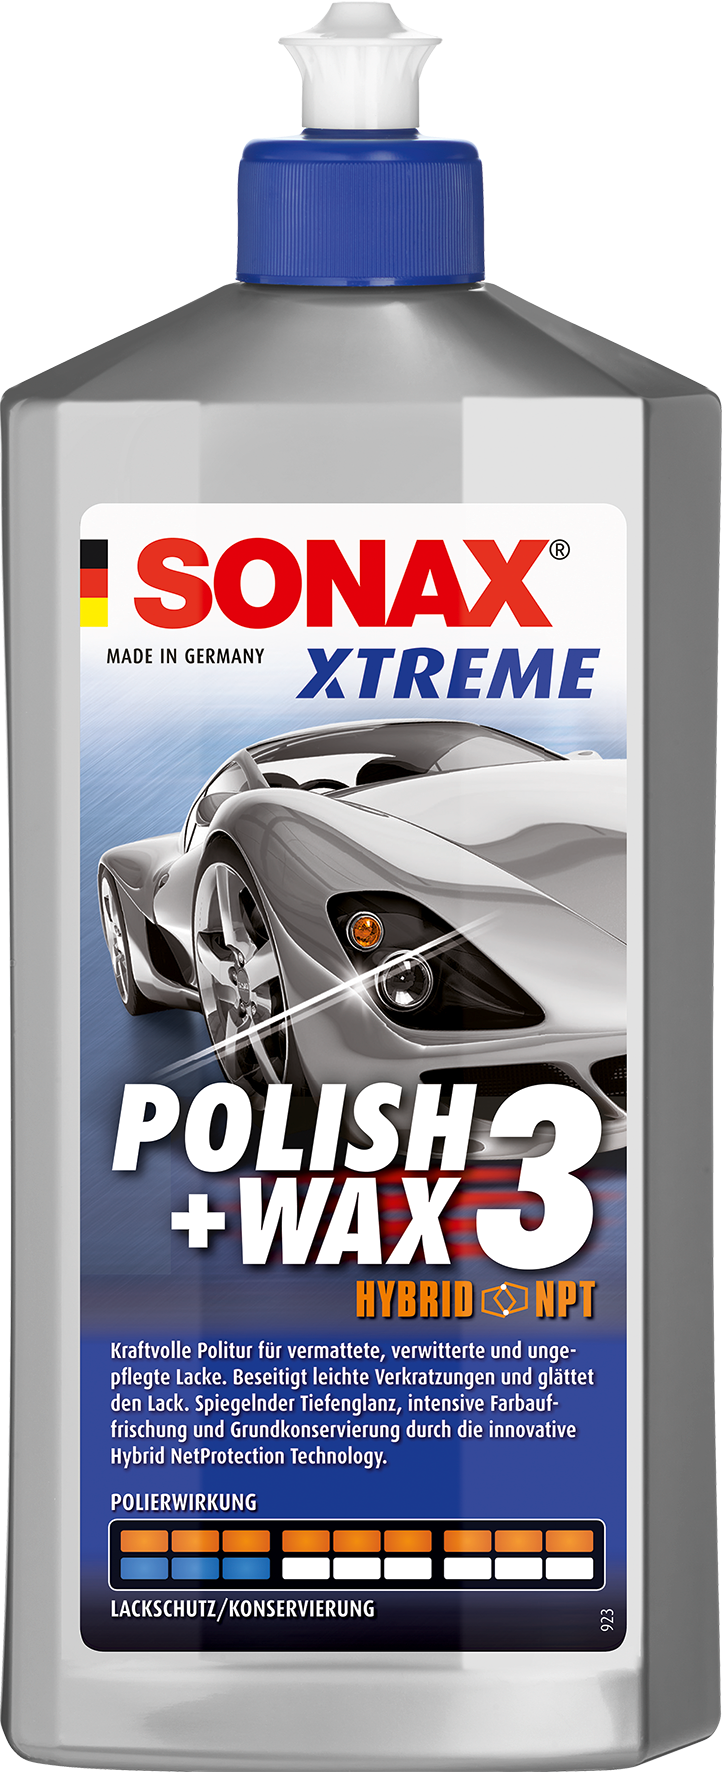 Sonax 02022000 Xtreme Polish+Wax 3 Hybrid 500ml